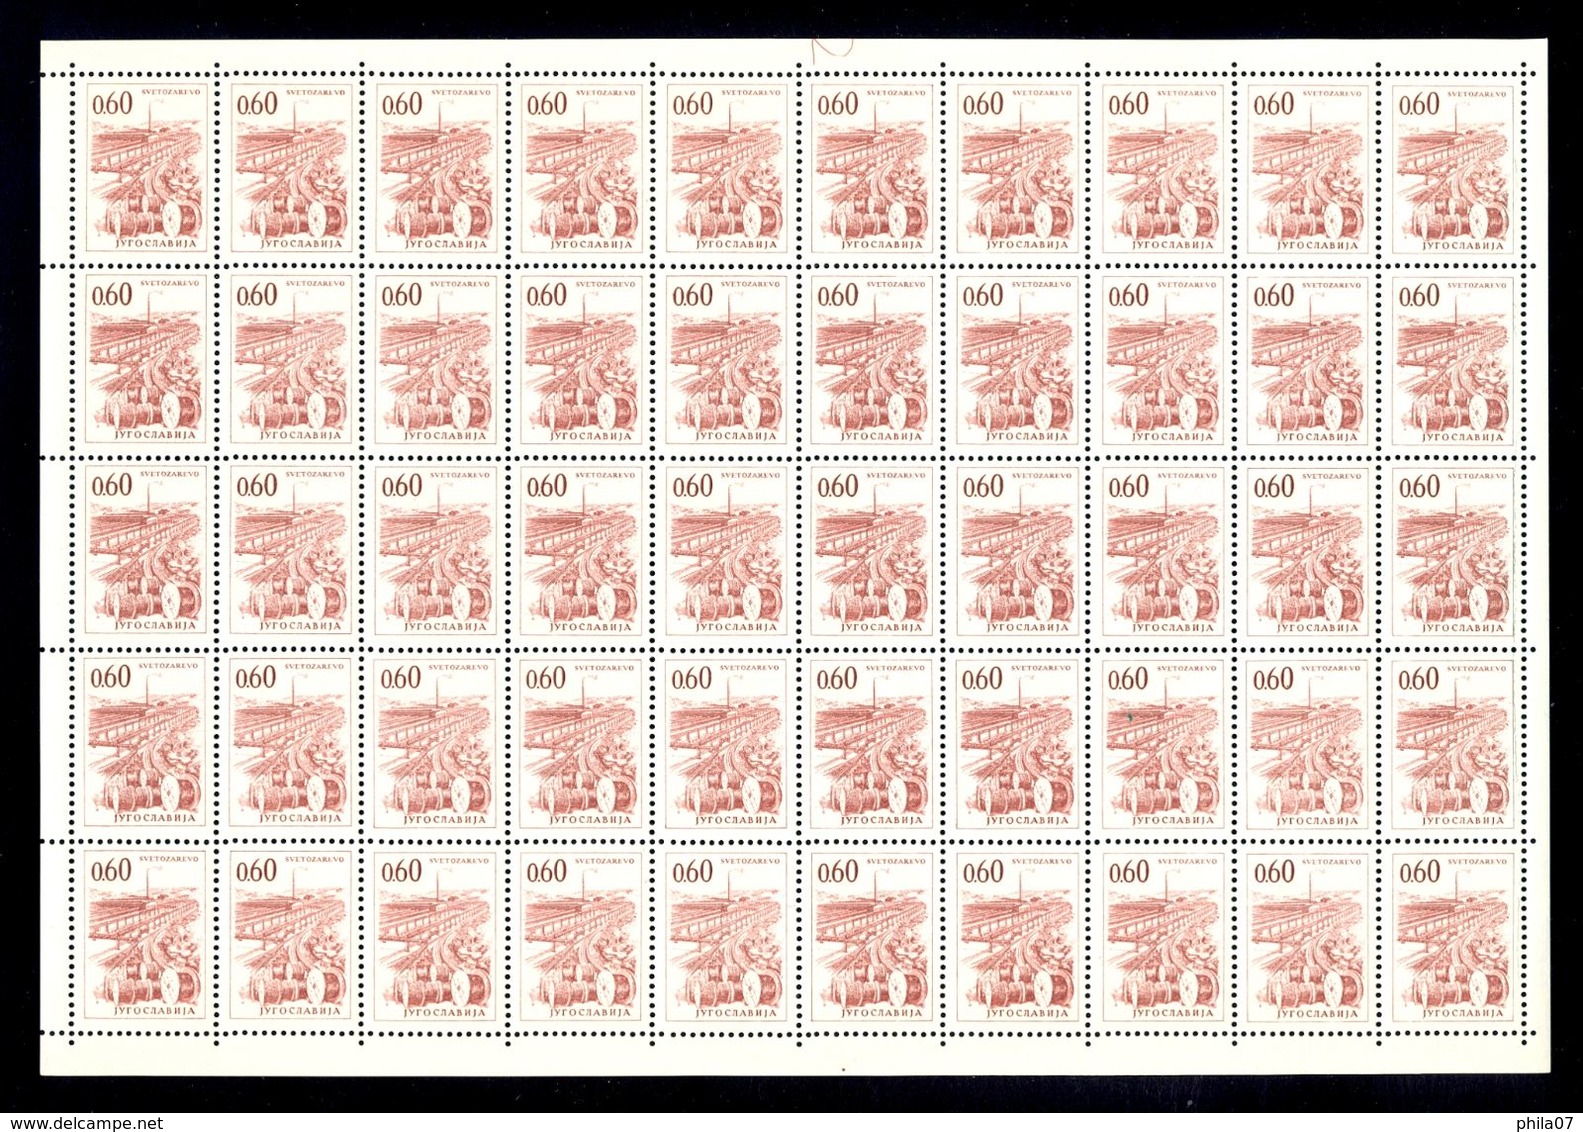 Yugoslavia - Mi.No. 1164/1172, complete series in sheet, stamp Mi.No. 1170 left vertical edge in brown color / 10 scans